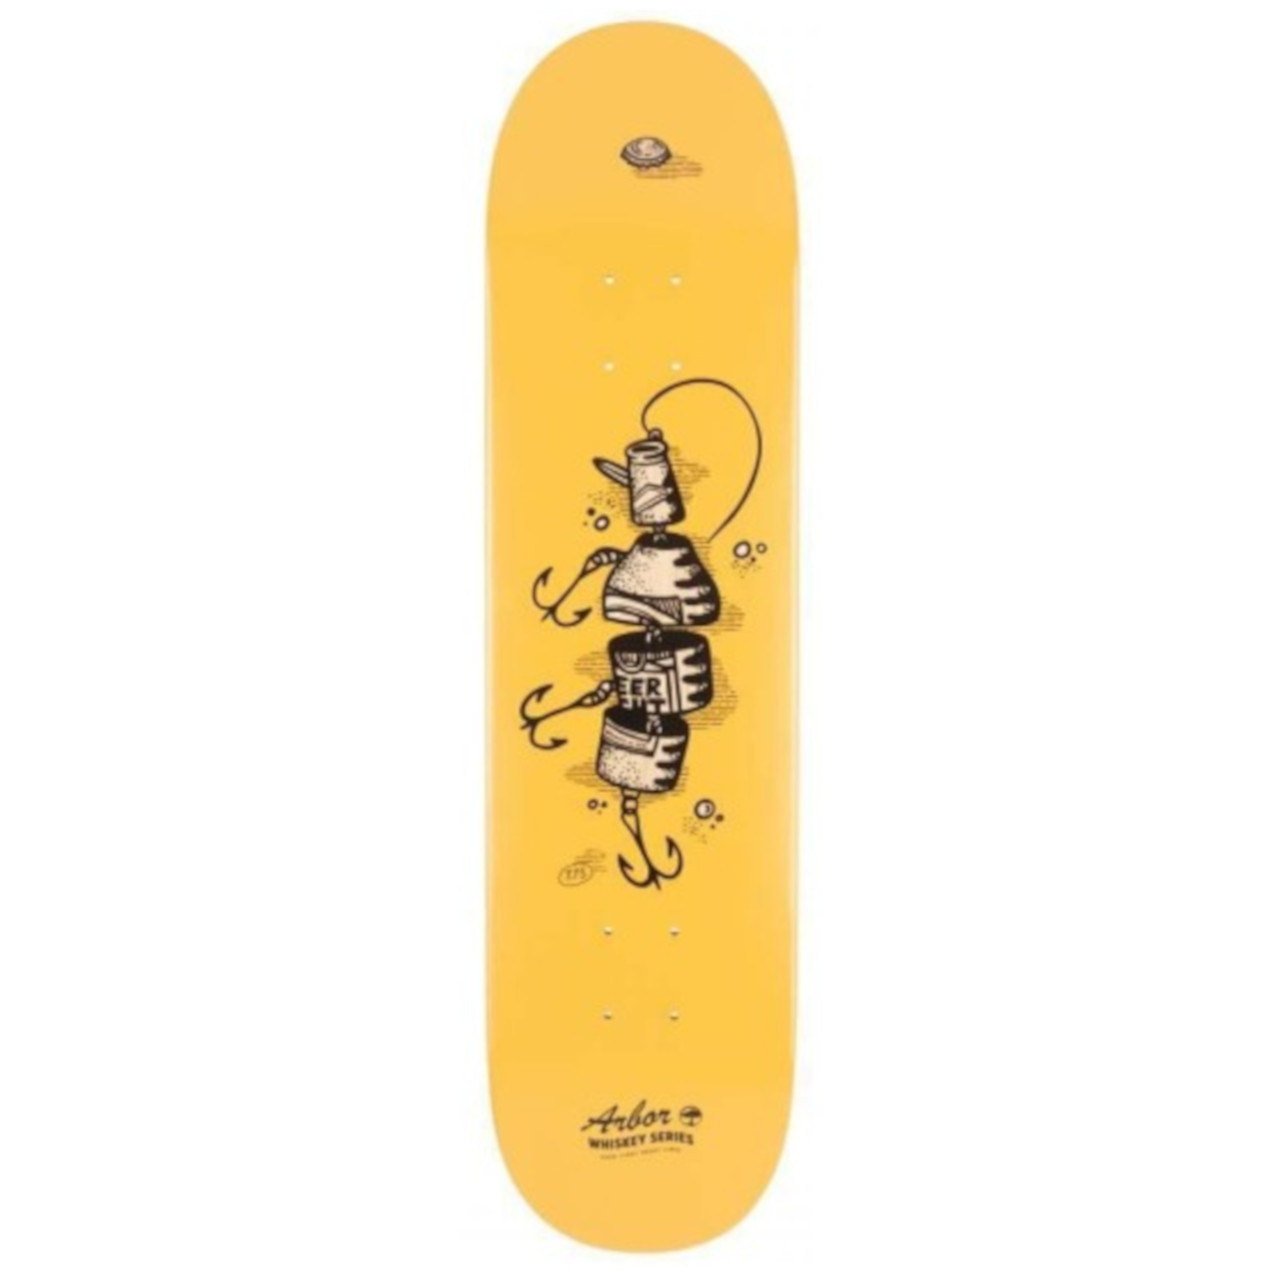 Abora Whisky Skateboard Deck - RollBack World